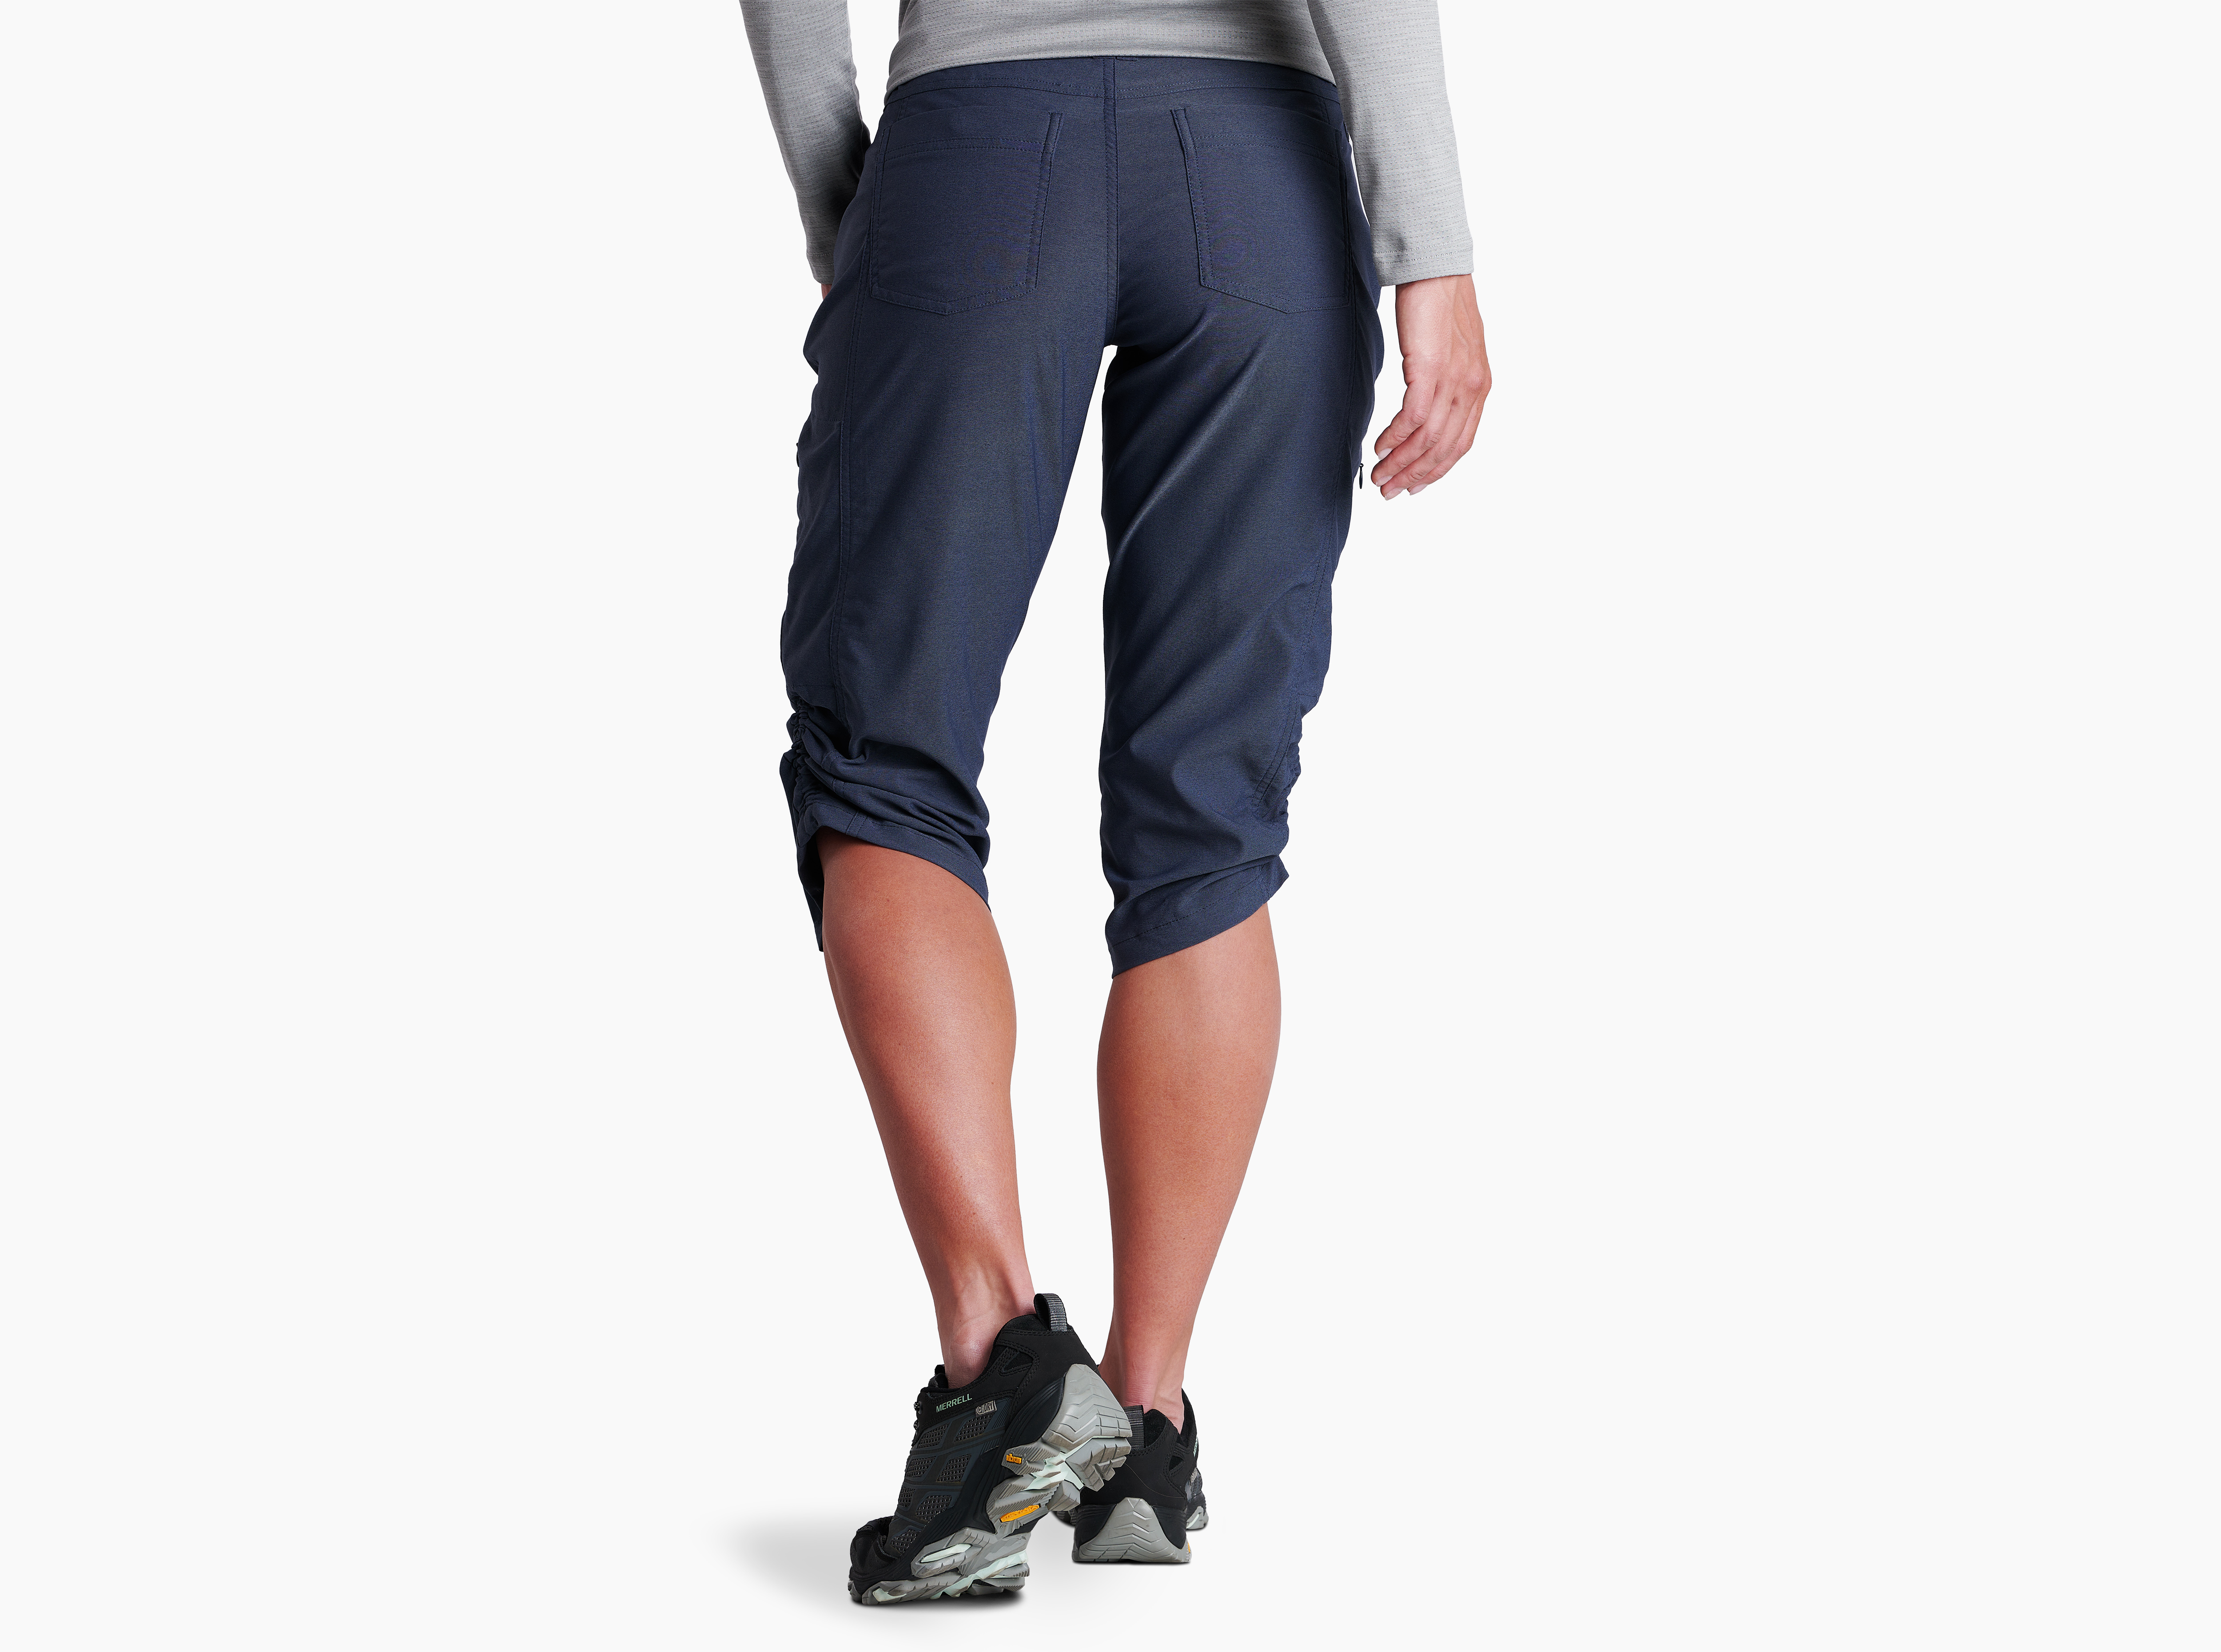 Kuhl Gray Cropped Cargo Capri Pants Size 12 - $29 - From Tabitha